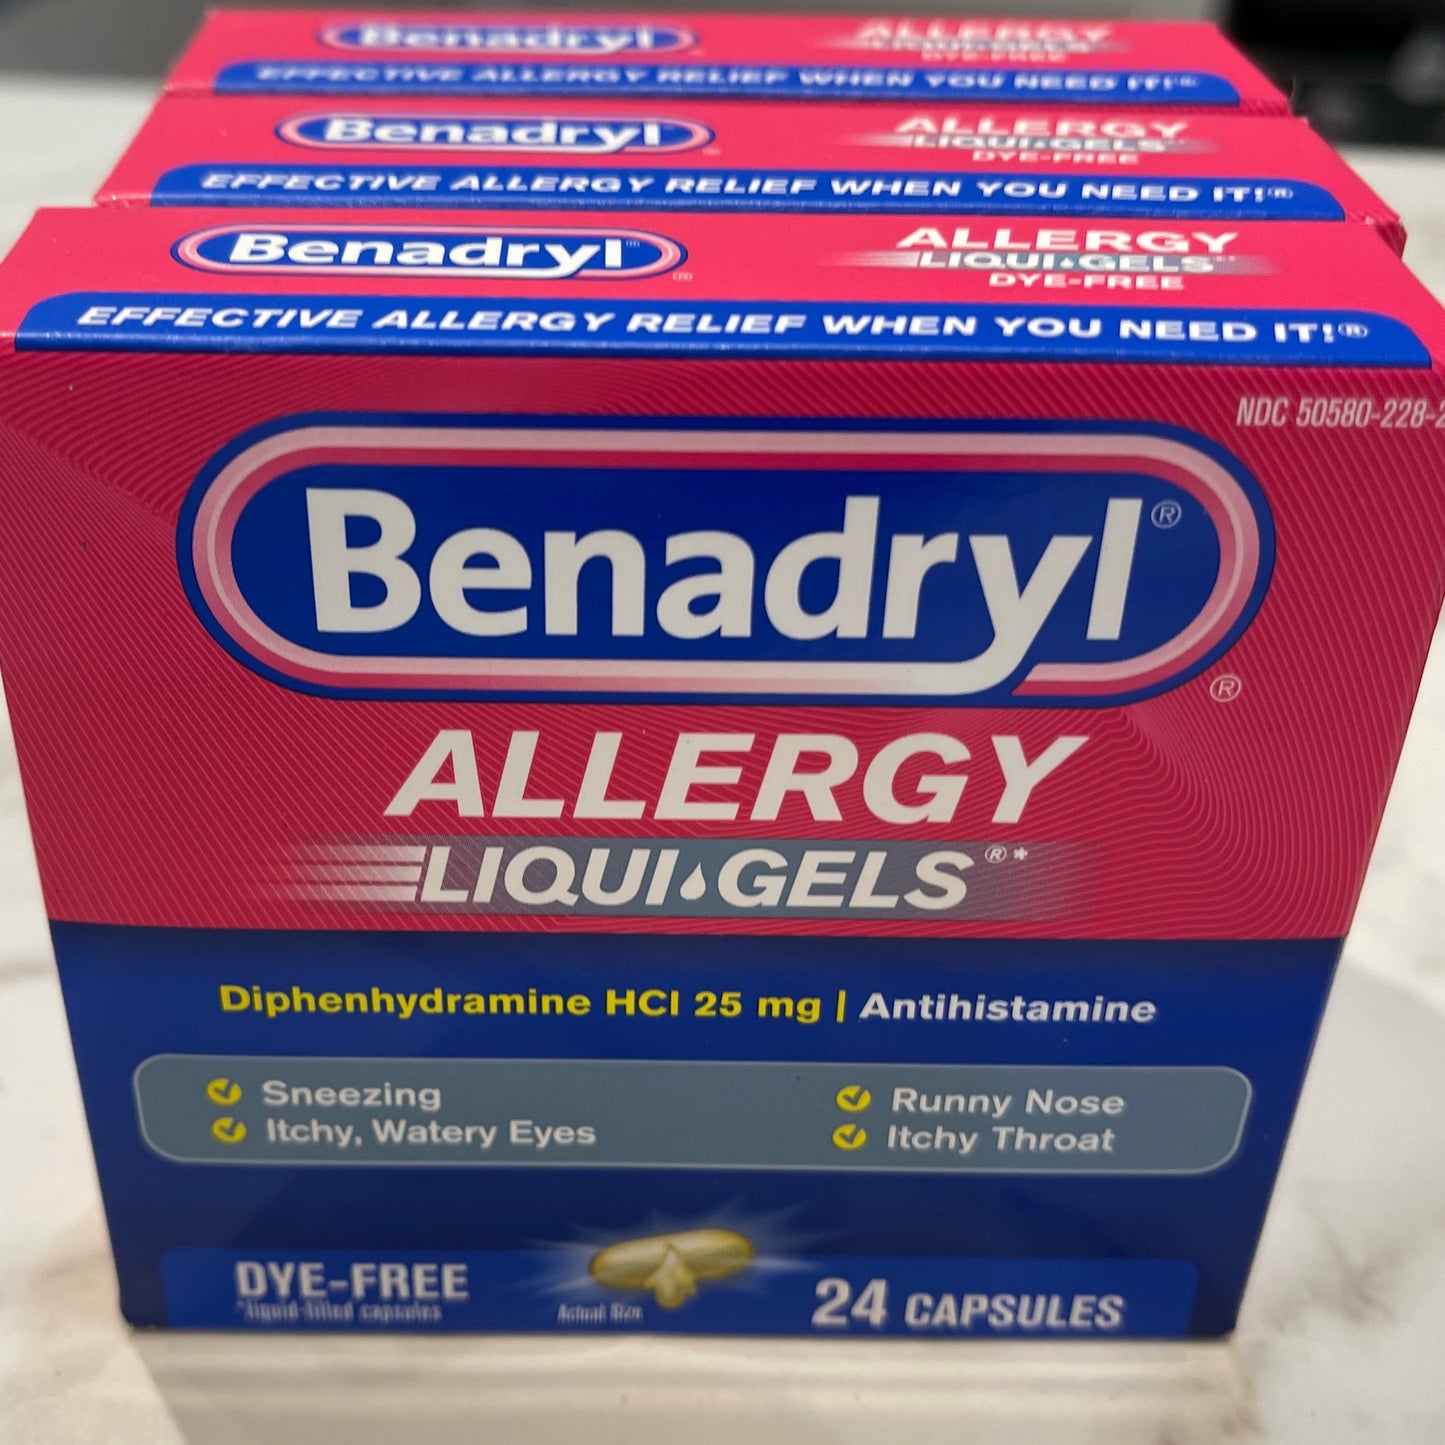 Benadryl liquid gel